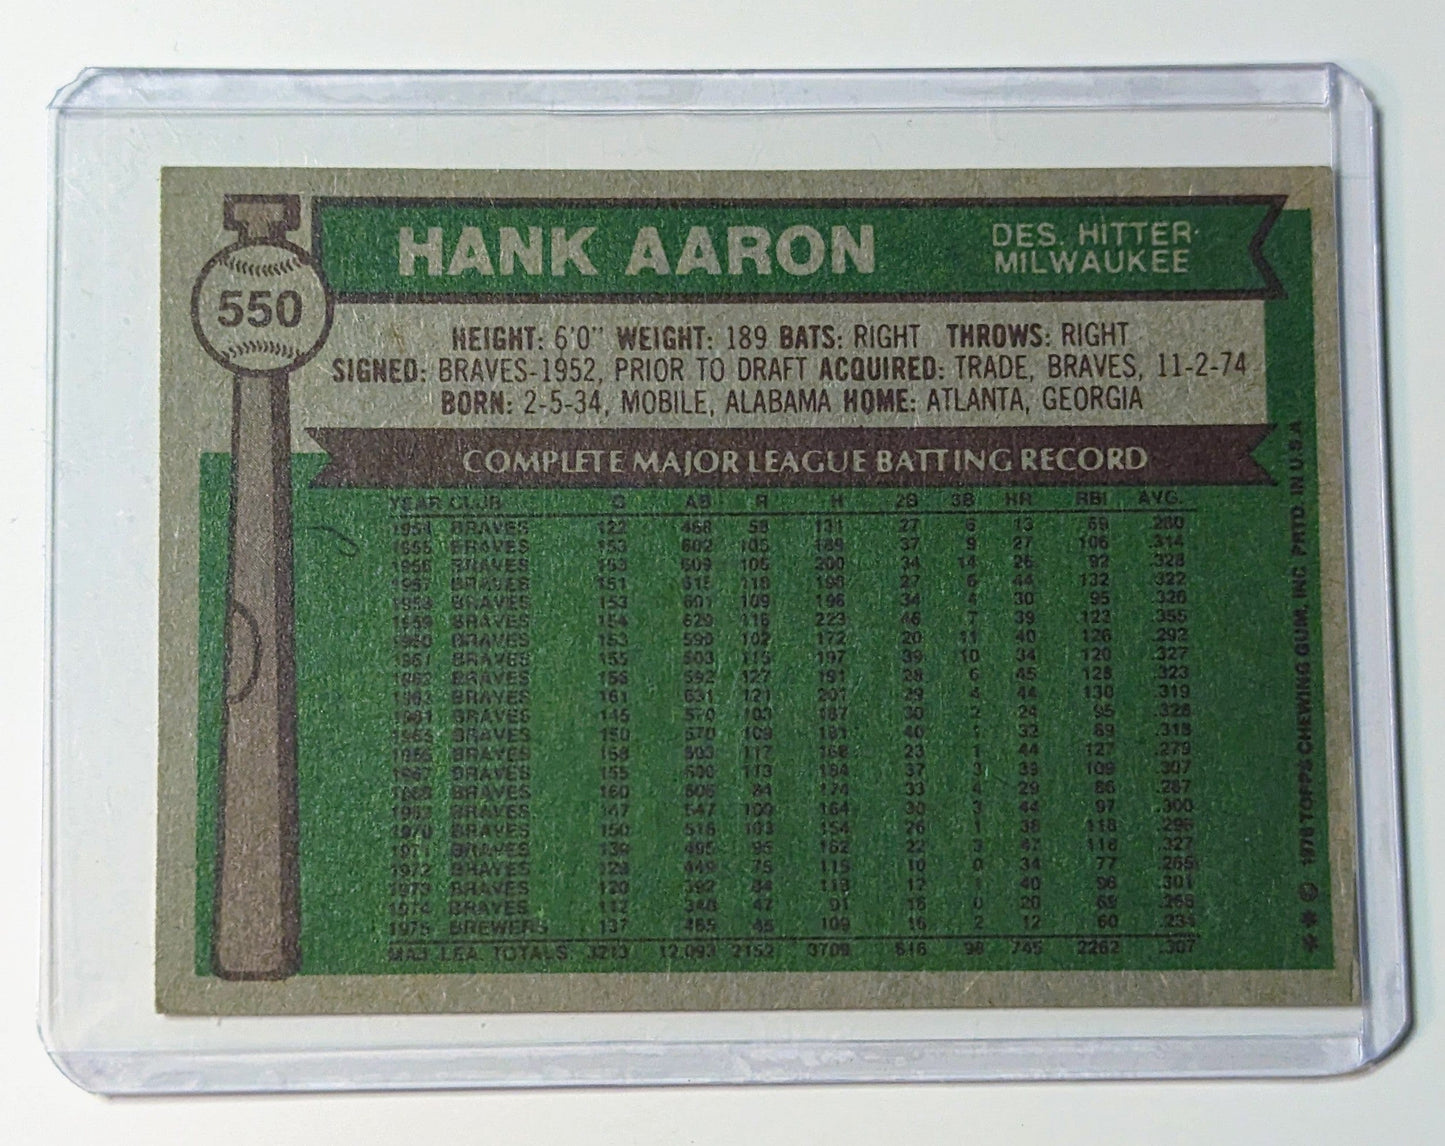 FIINR Baseball Card 1976 Topps Hank Aaron Baseball Card #550 - Mint Condition